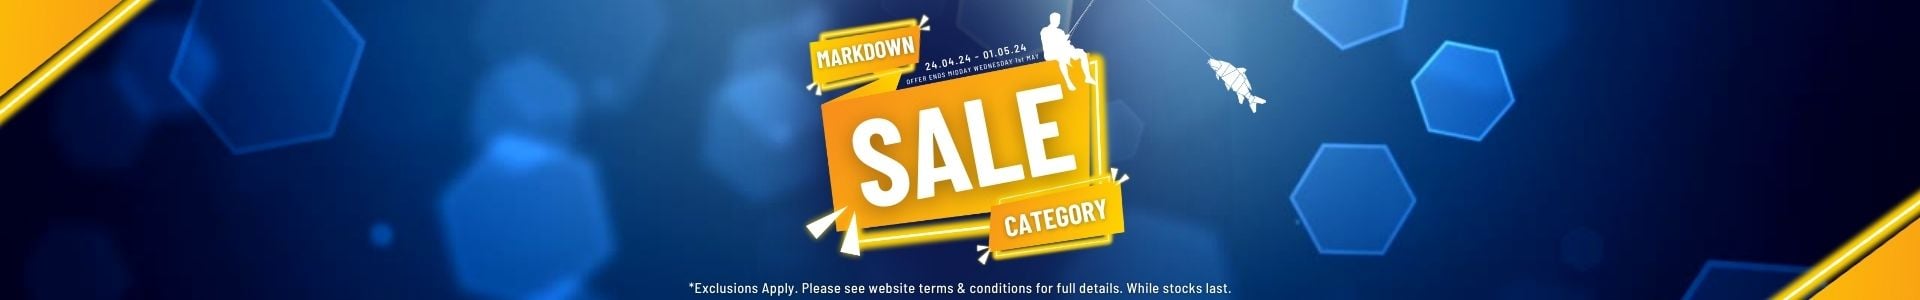 Markdown Sale